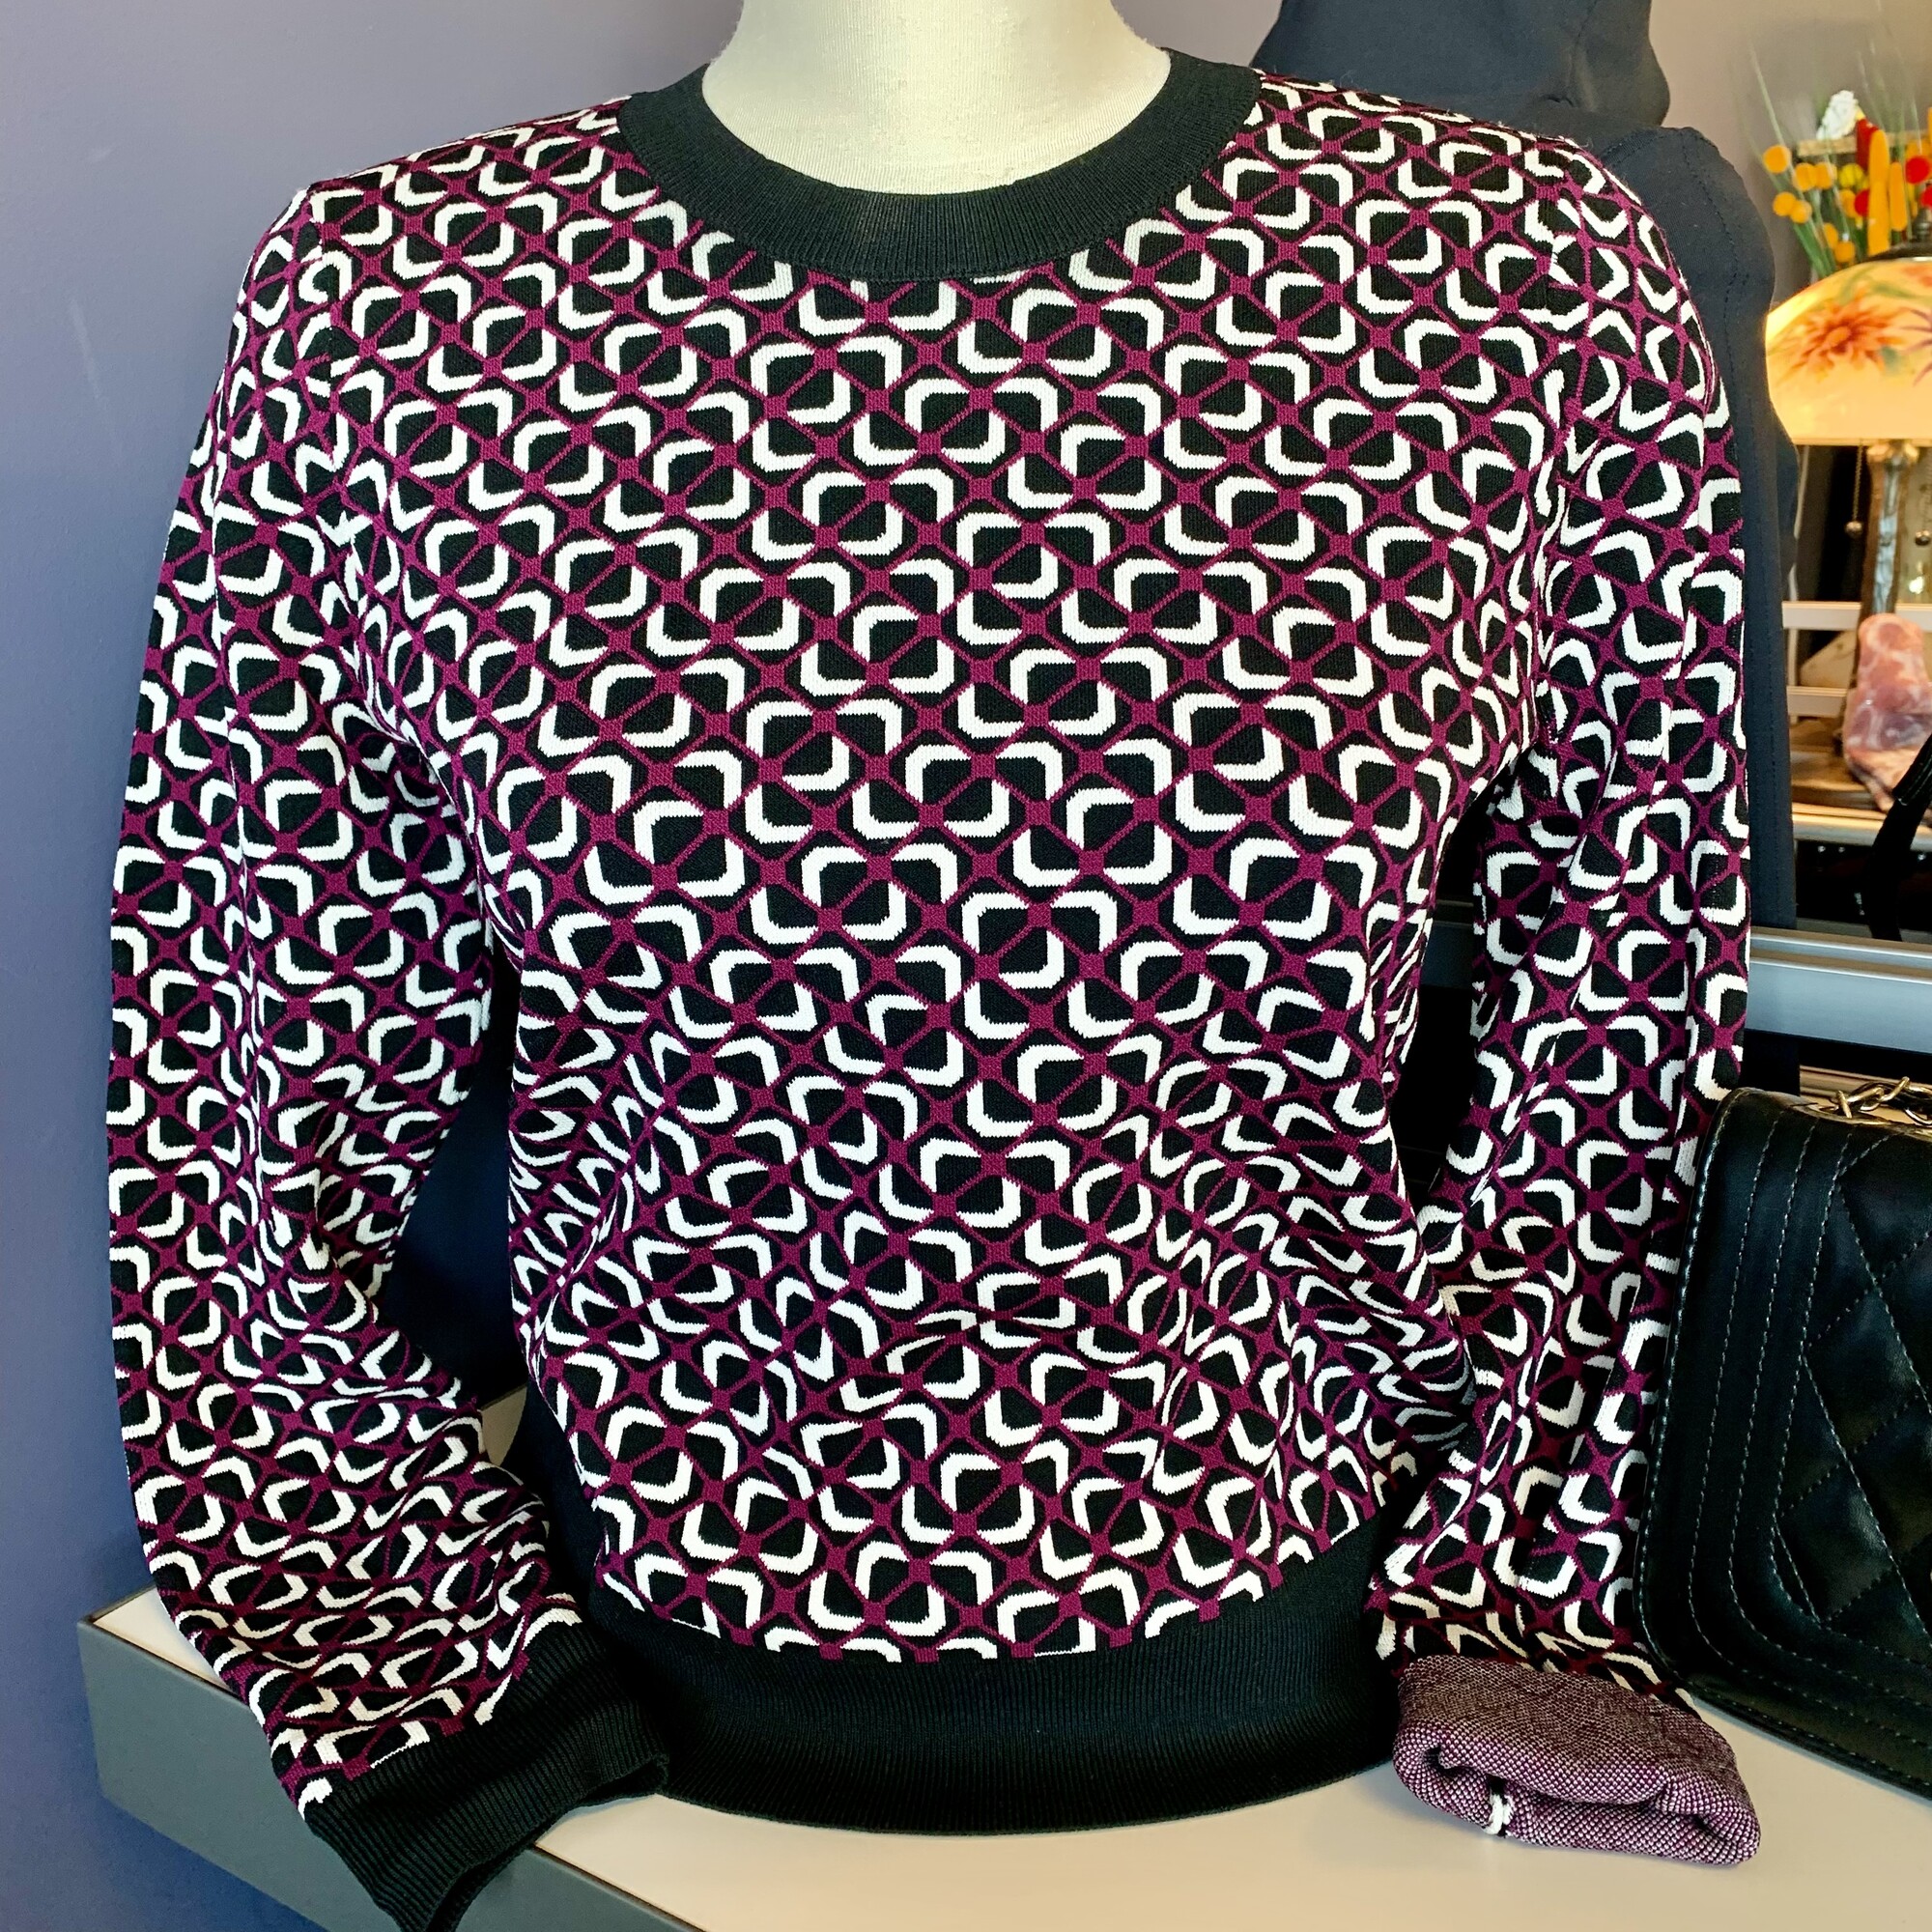 Michael Kors Sweater,
Colour: Black ecru and maroon,
Size: Medium